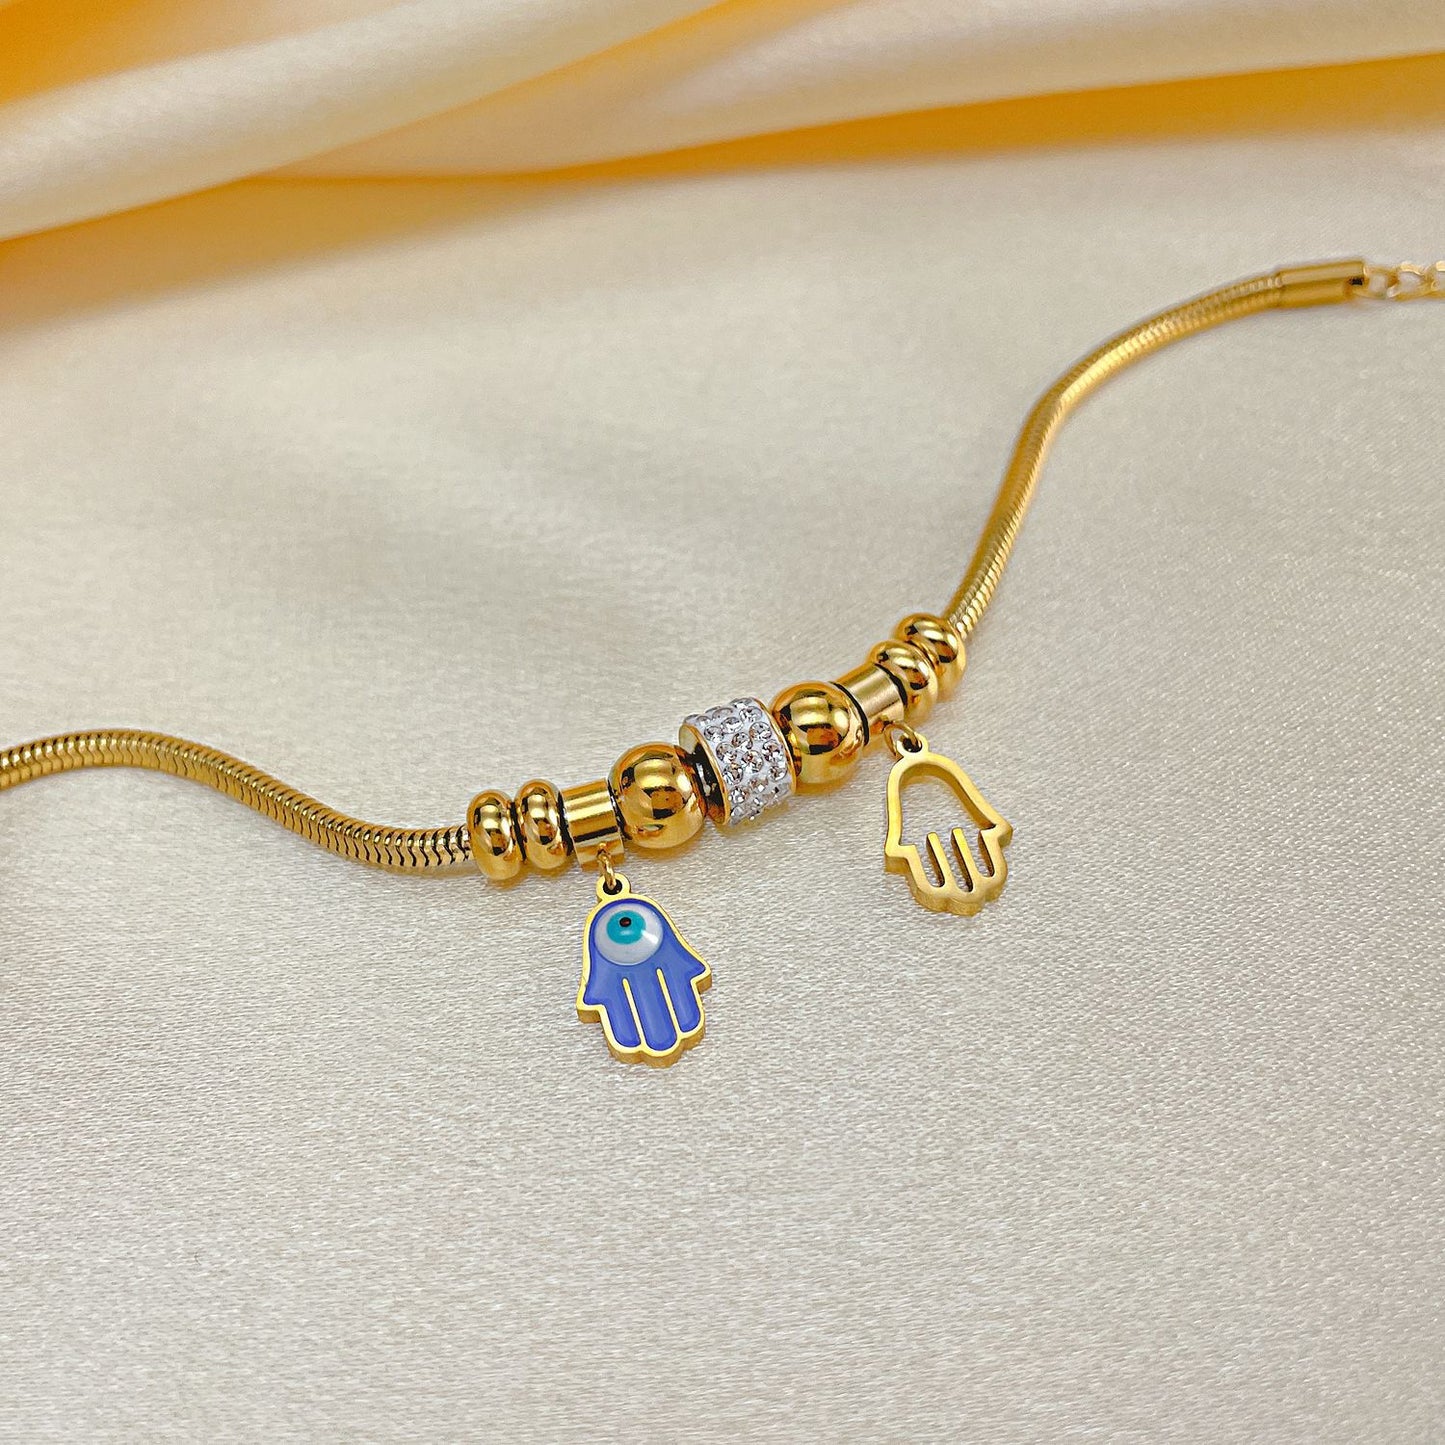 Pandora Style Beads Bracelet Gift for Her